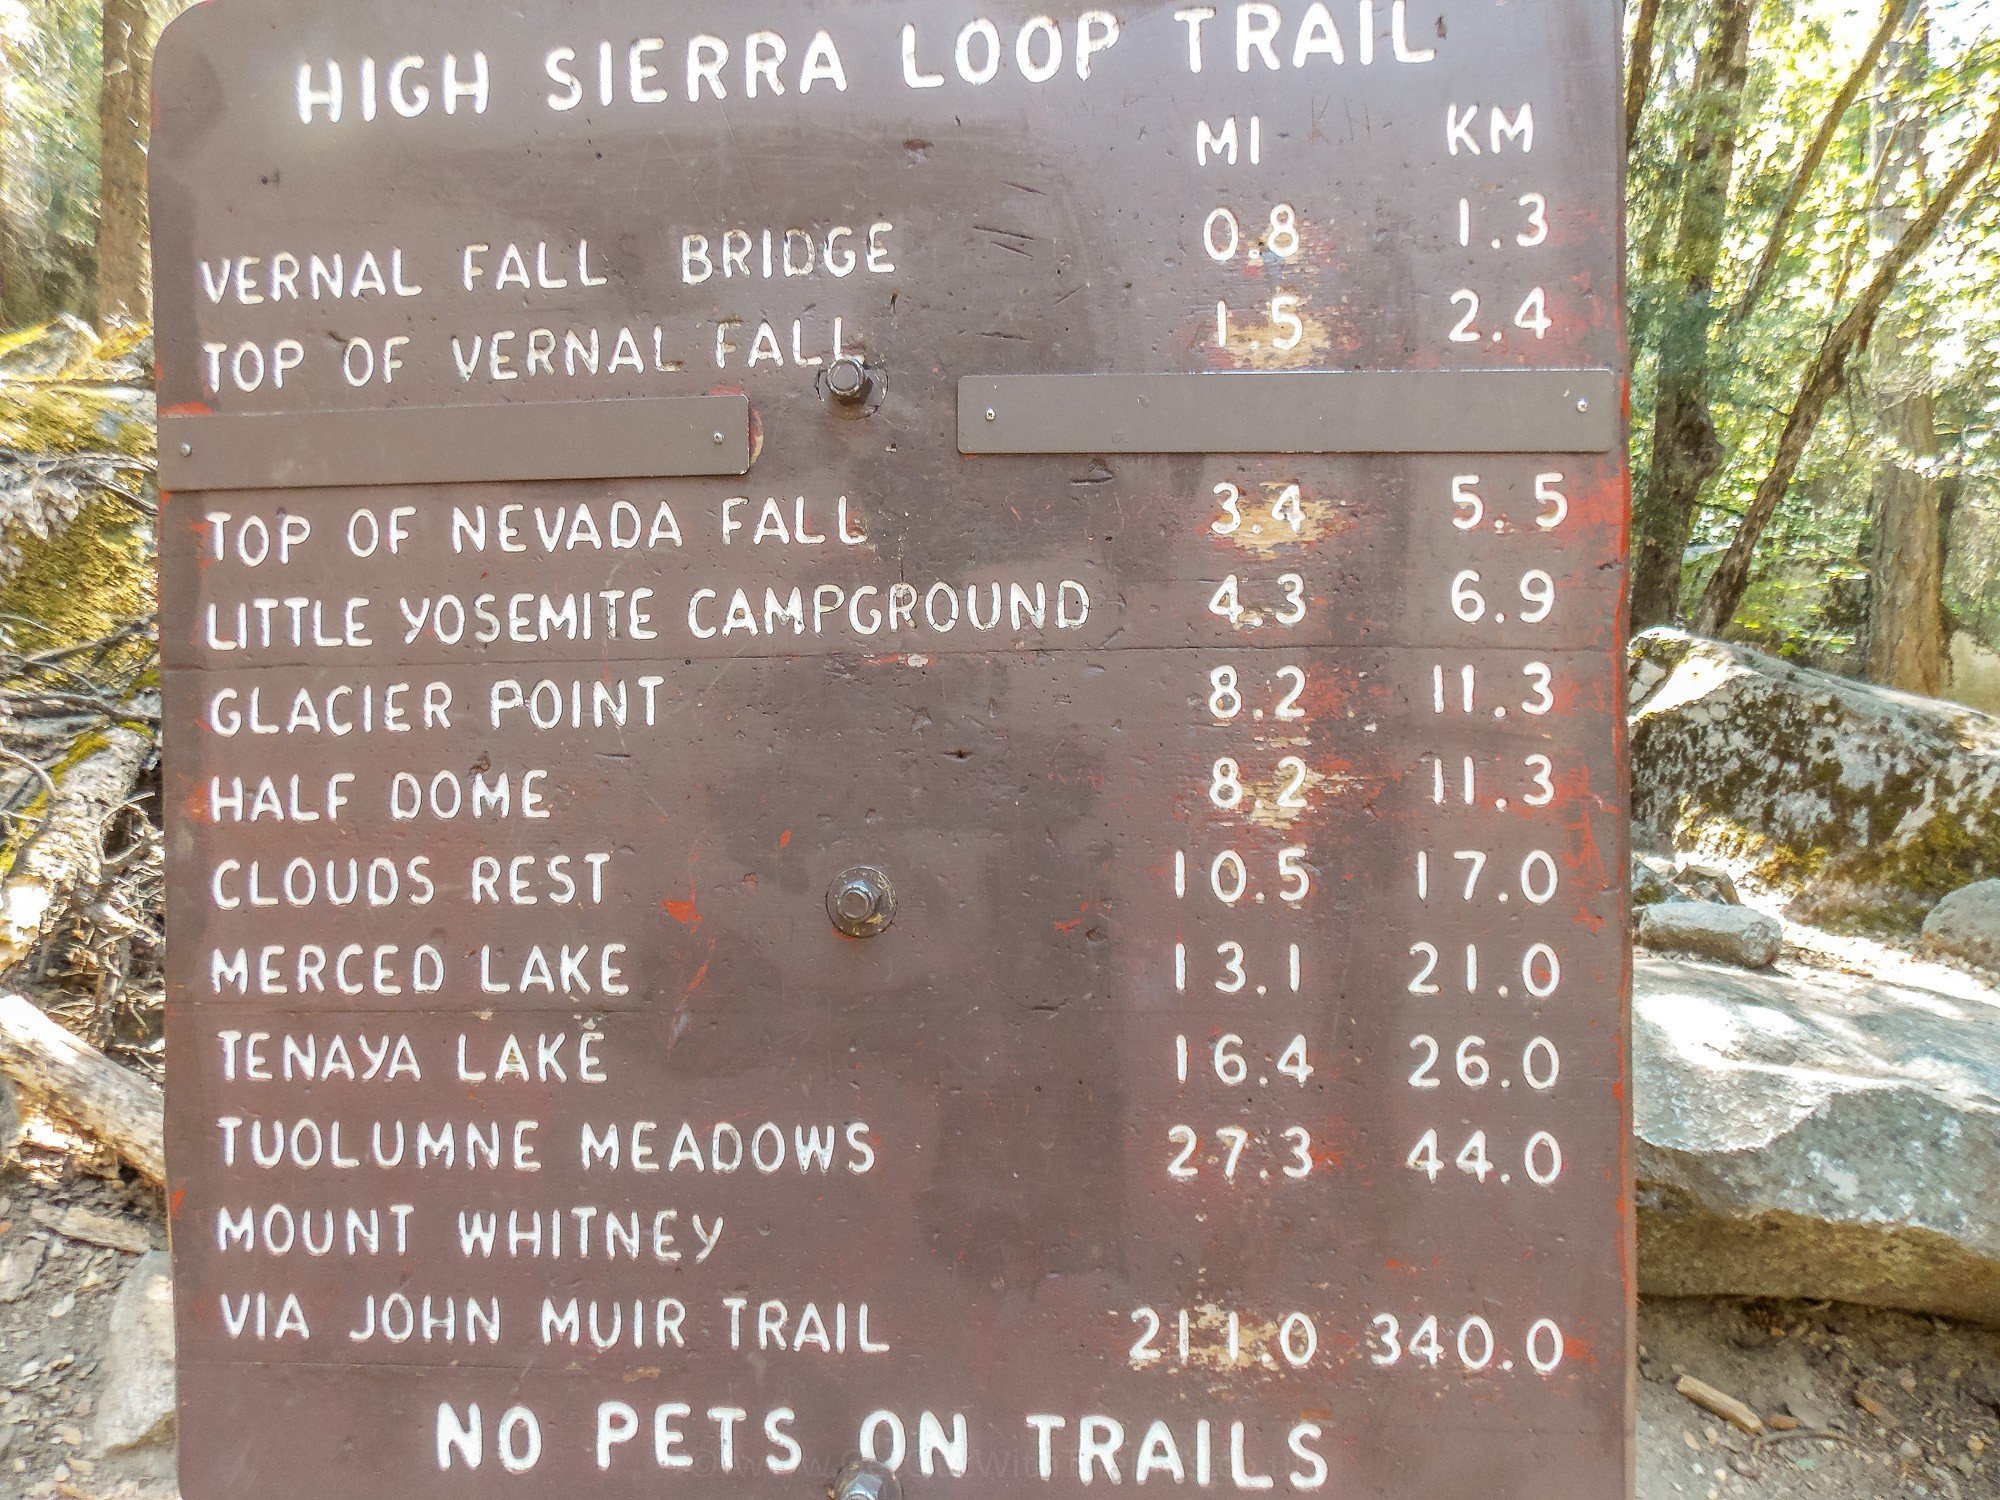 The High Sierra Loop Trail